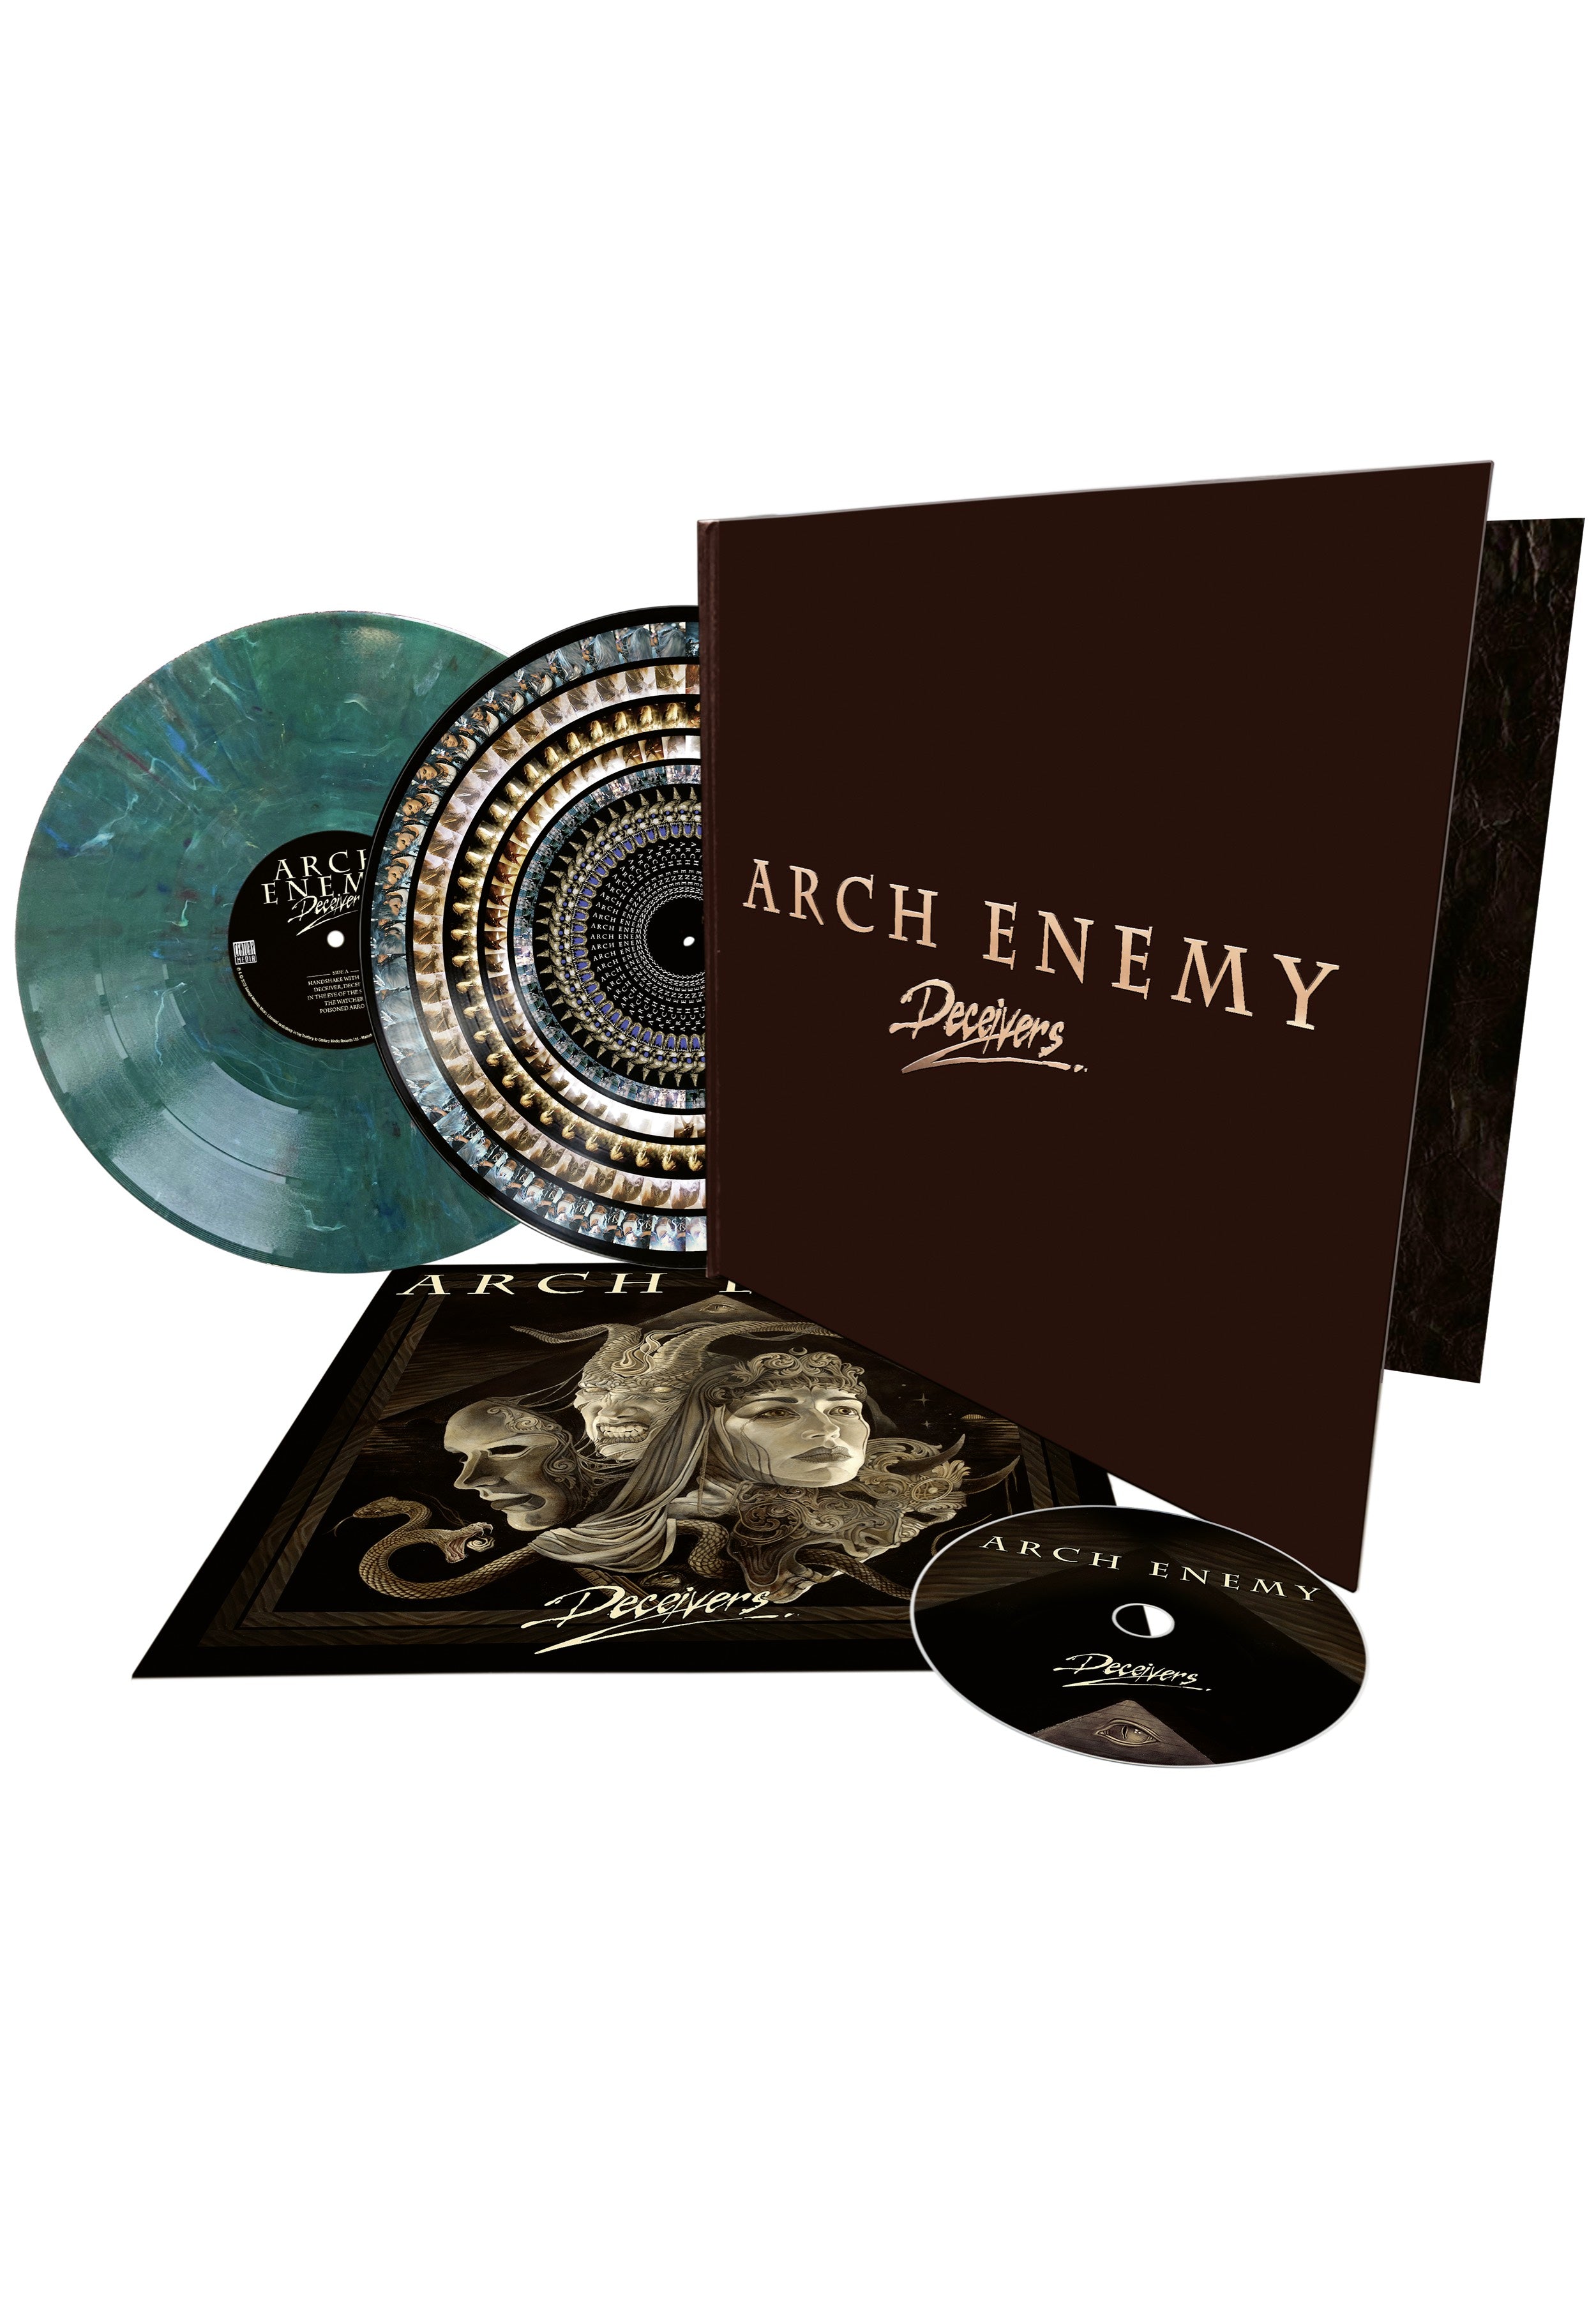 Arch Enemy - Deceivers Ltd. Deluxe - Artbook 2 Vinyl + CD